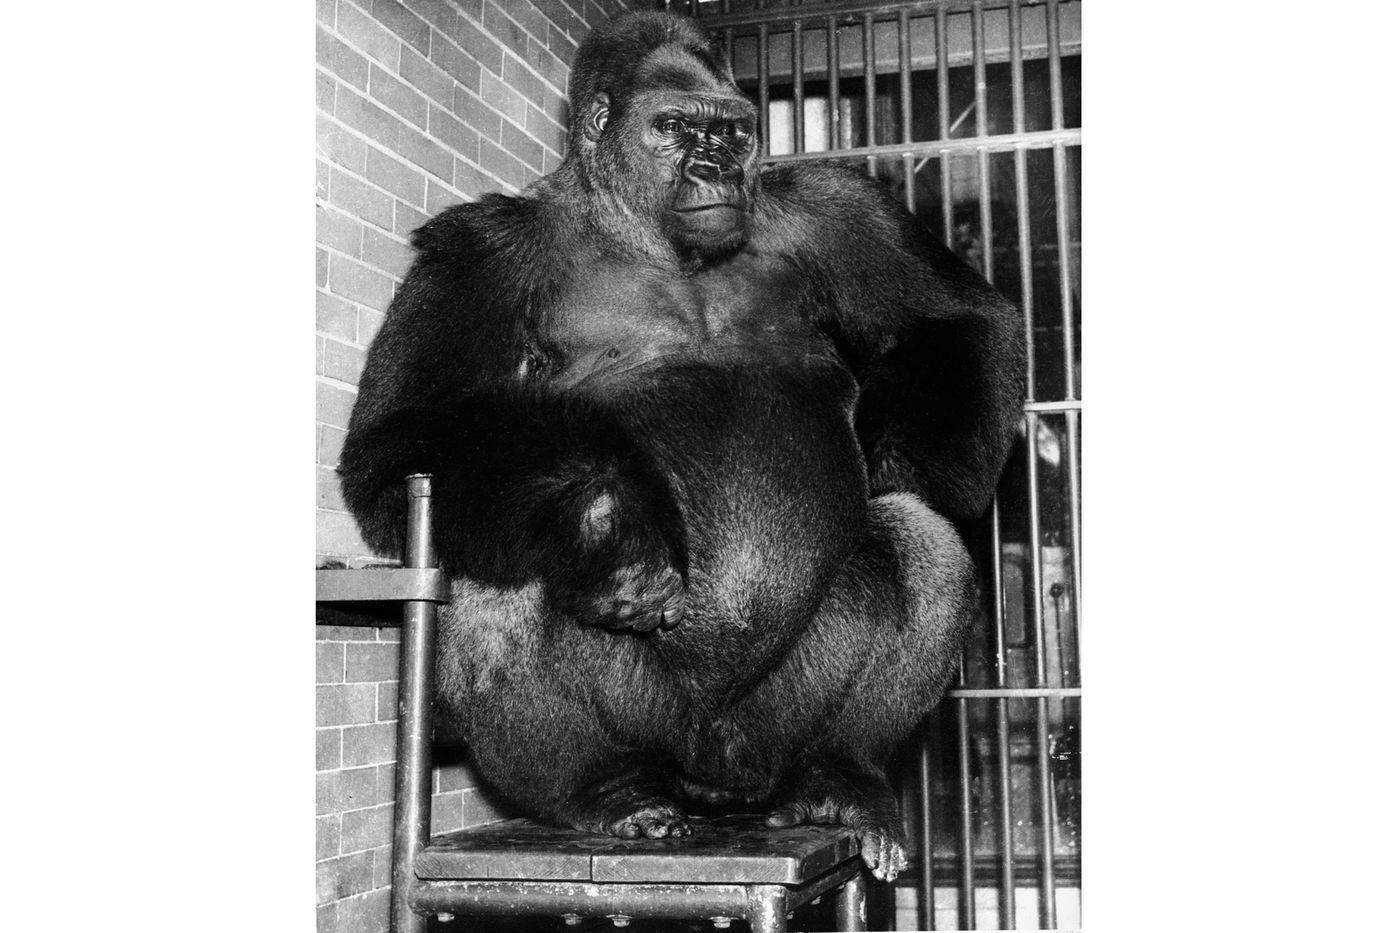 Bushman as a mature gorilla. (Courtesy of Lincoln Park Zoo)